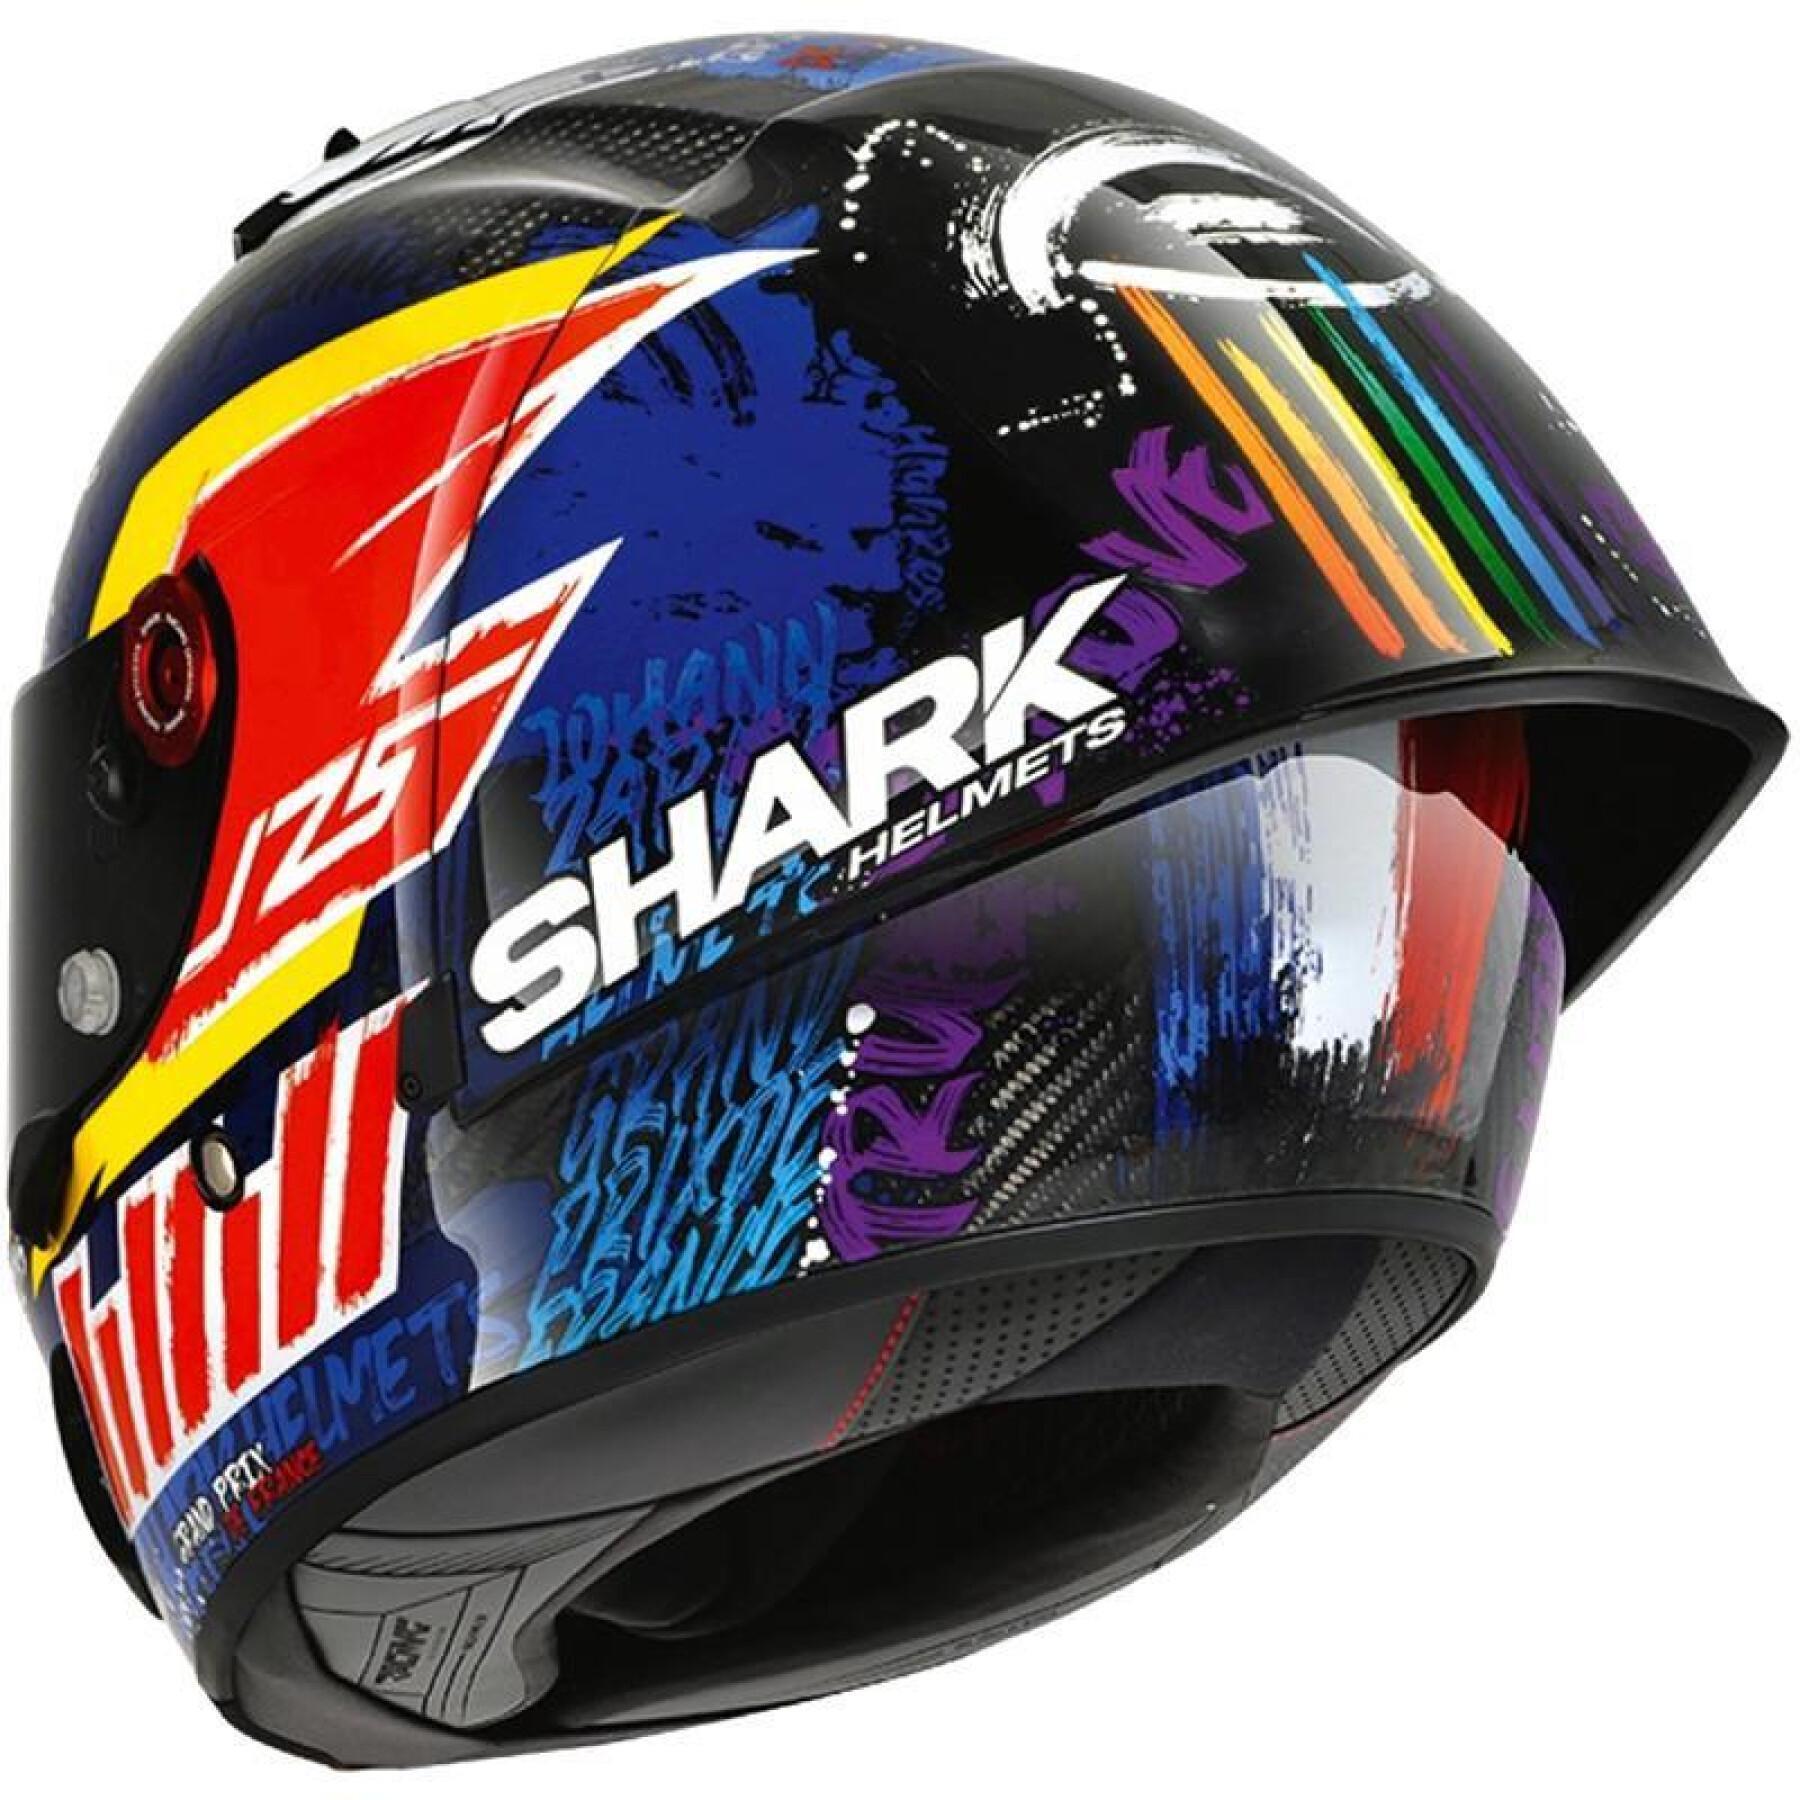 Casco integral Shark Race-R Pro GP 06 Replica Zarco Chakra